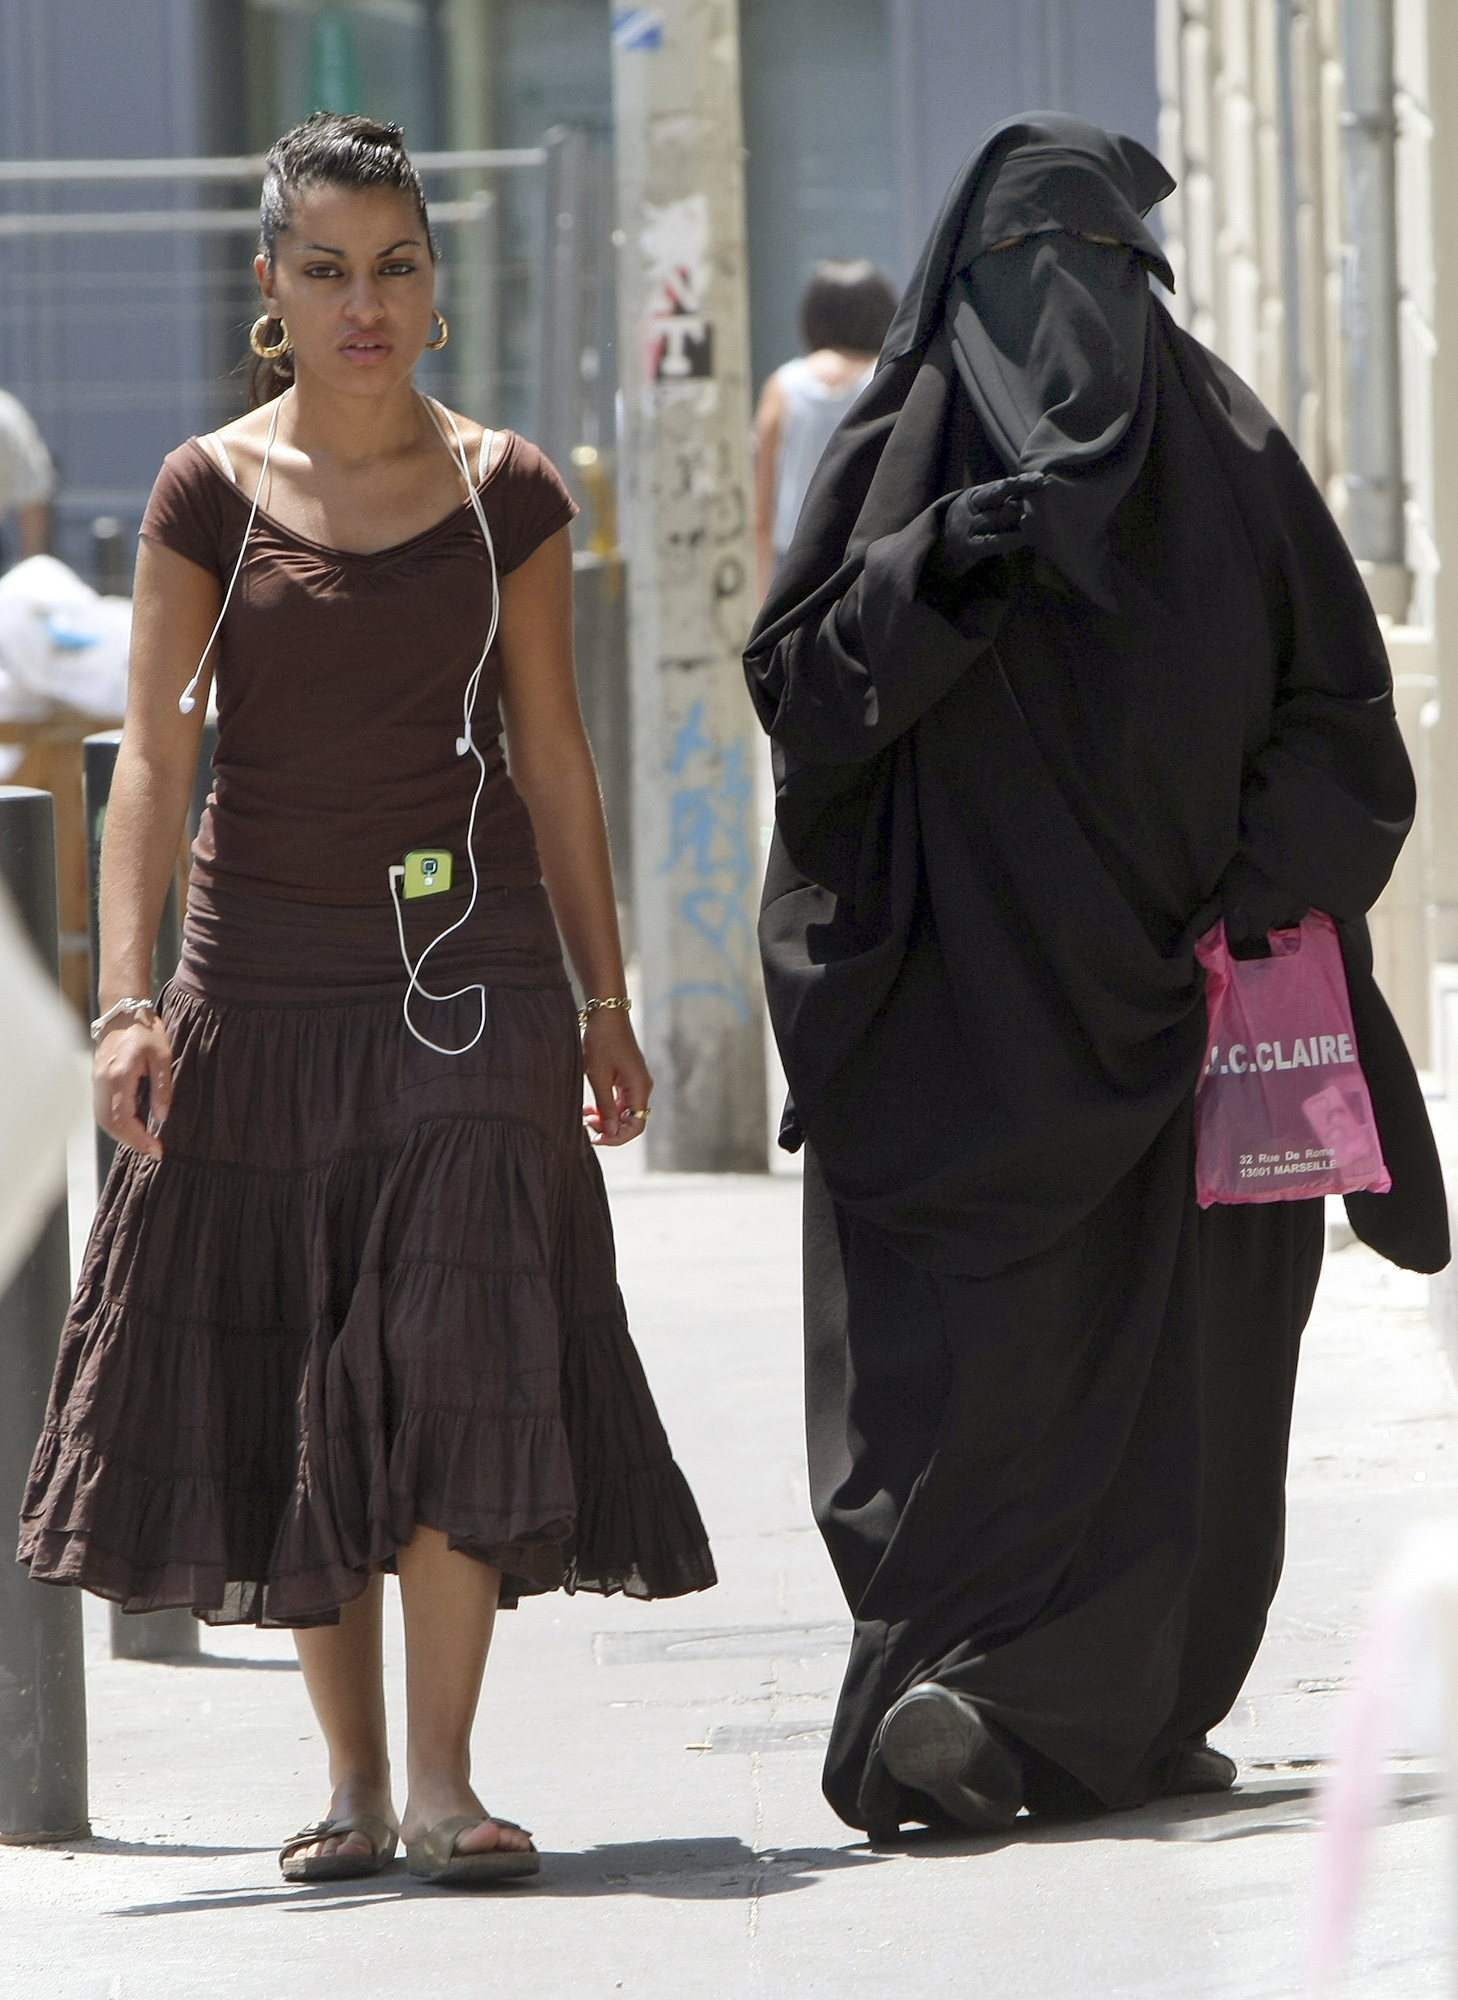 Burkaförbud, Forbud, Muslimer, Islamofobi, Burka, Niqab